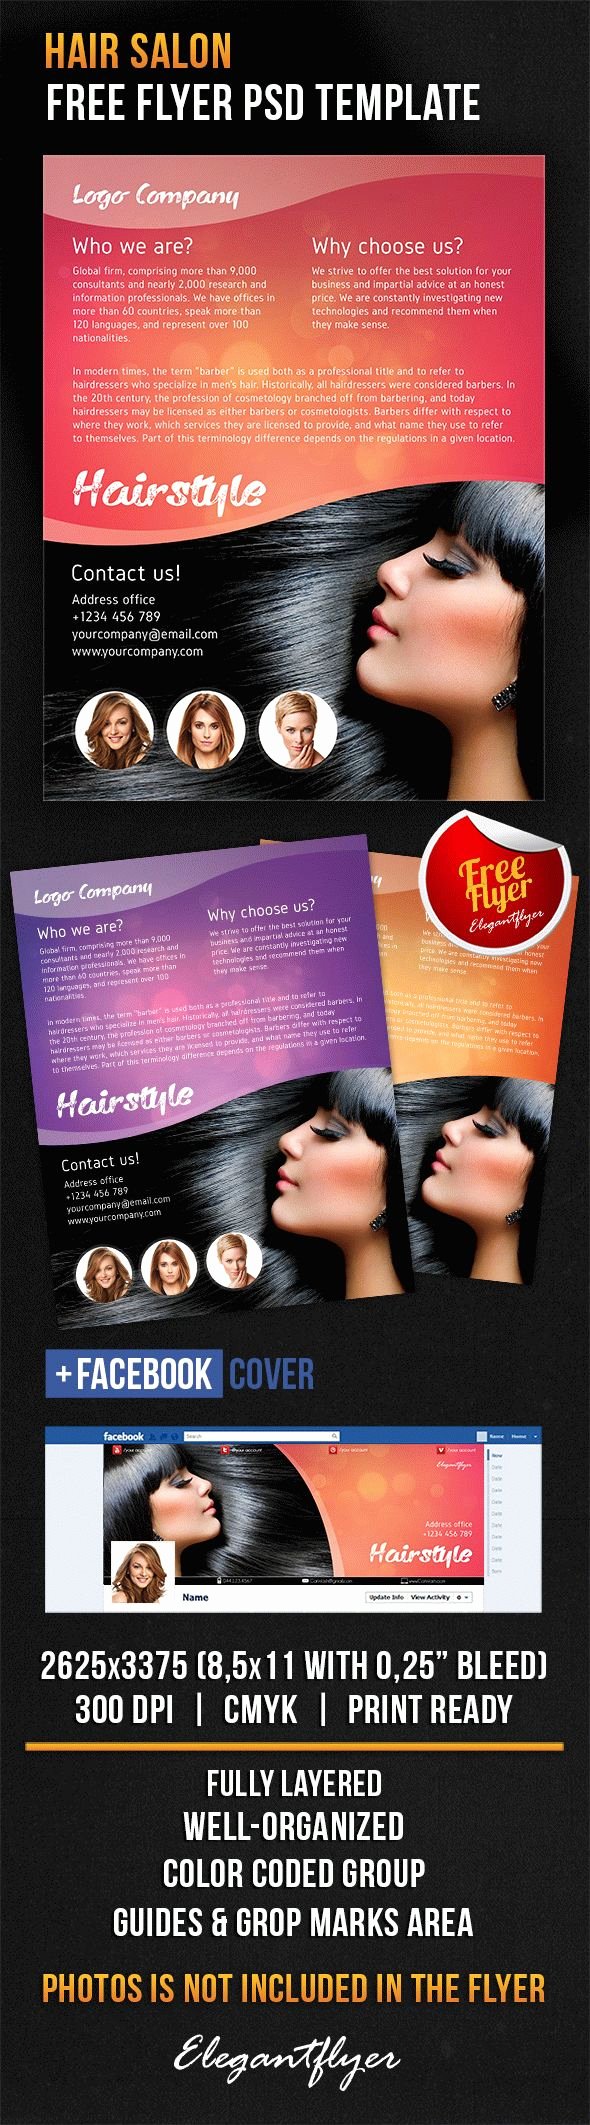 Hair Flyers Free Template Fresh Hair Salon – Free Flyer Psd Template – by Elegantflyer